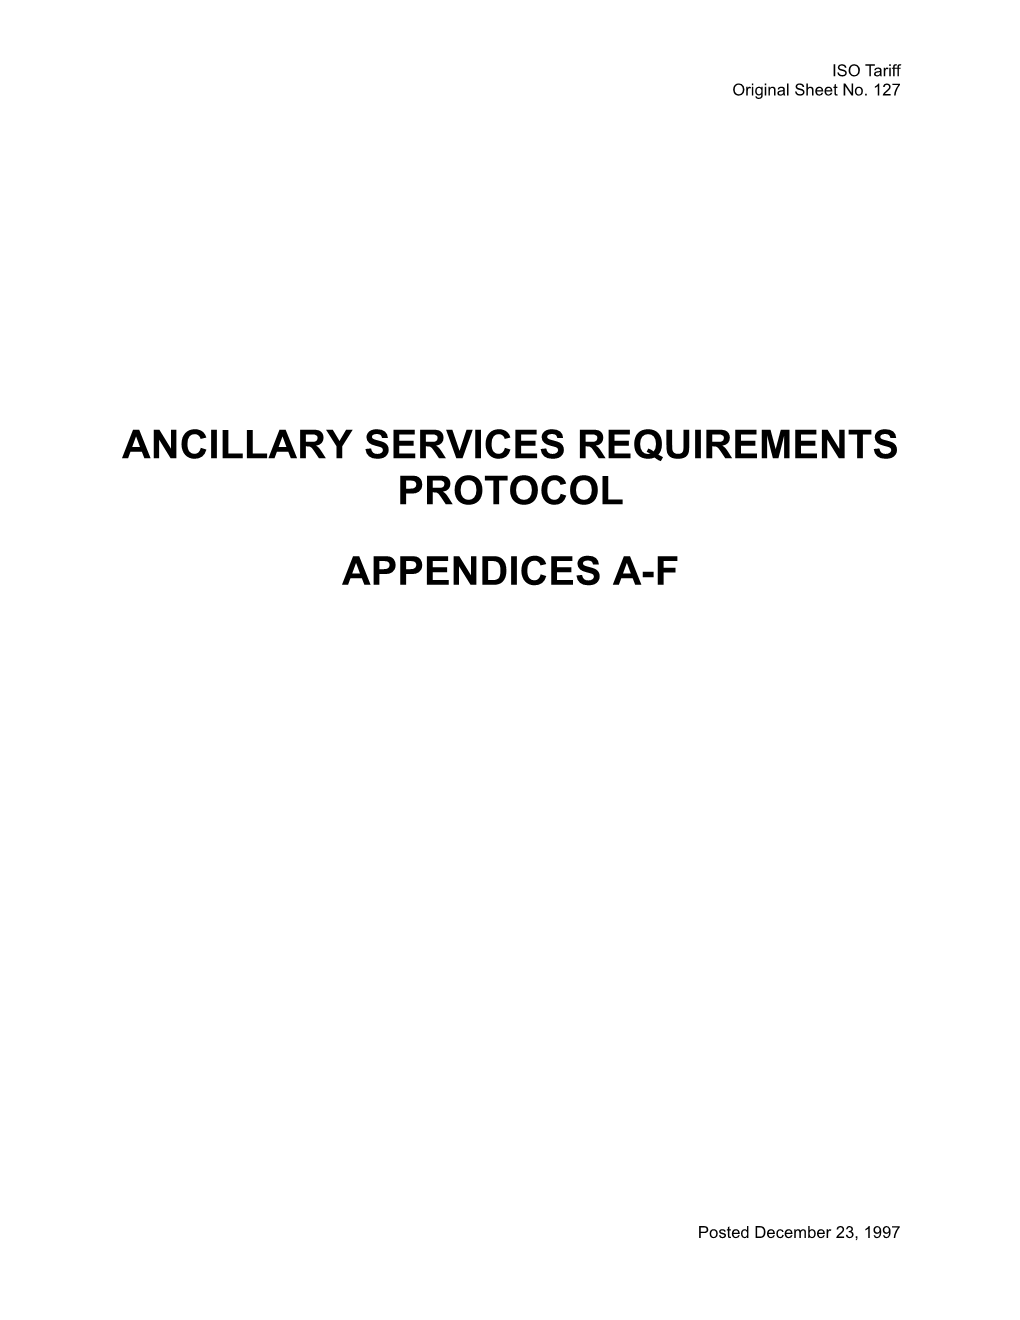 ASRP Appendix A-F Certification for Regulation